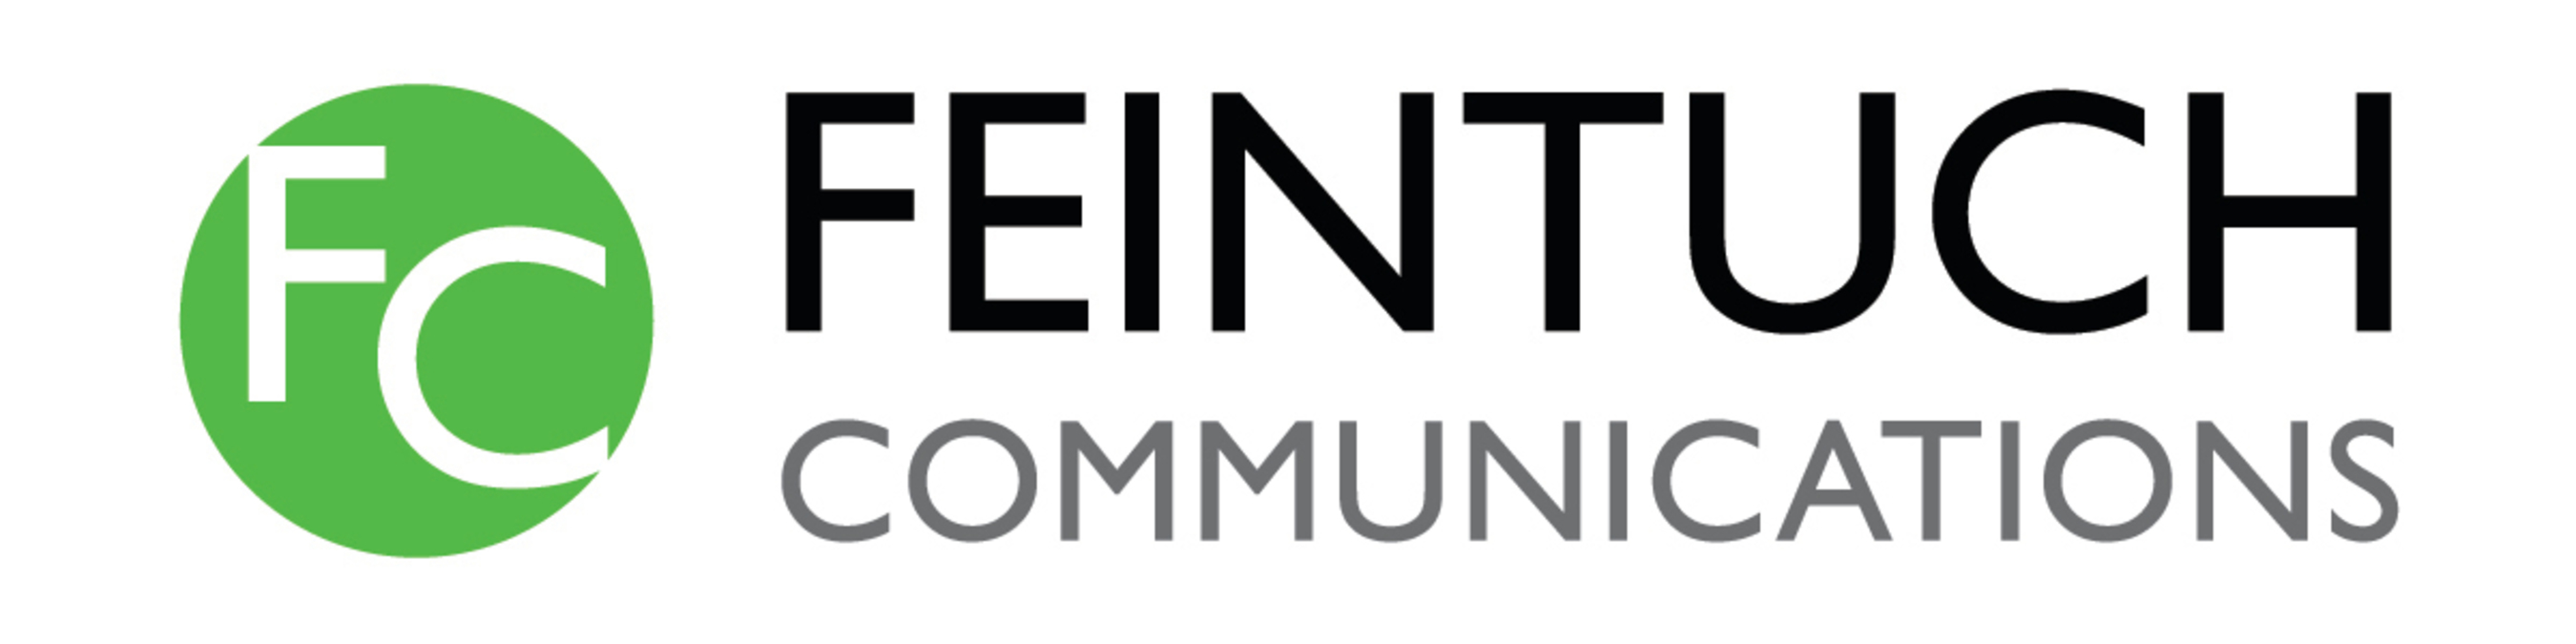 Feintuch Communications Logo (PRNewsFoto/Feintuch Communications)